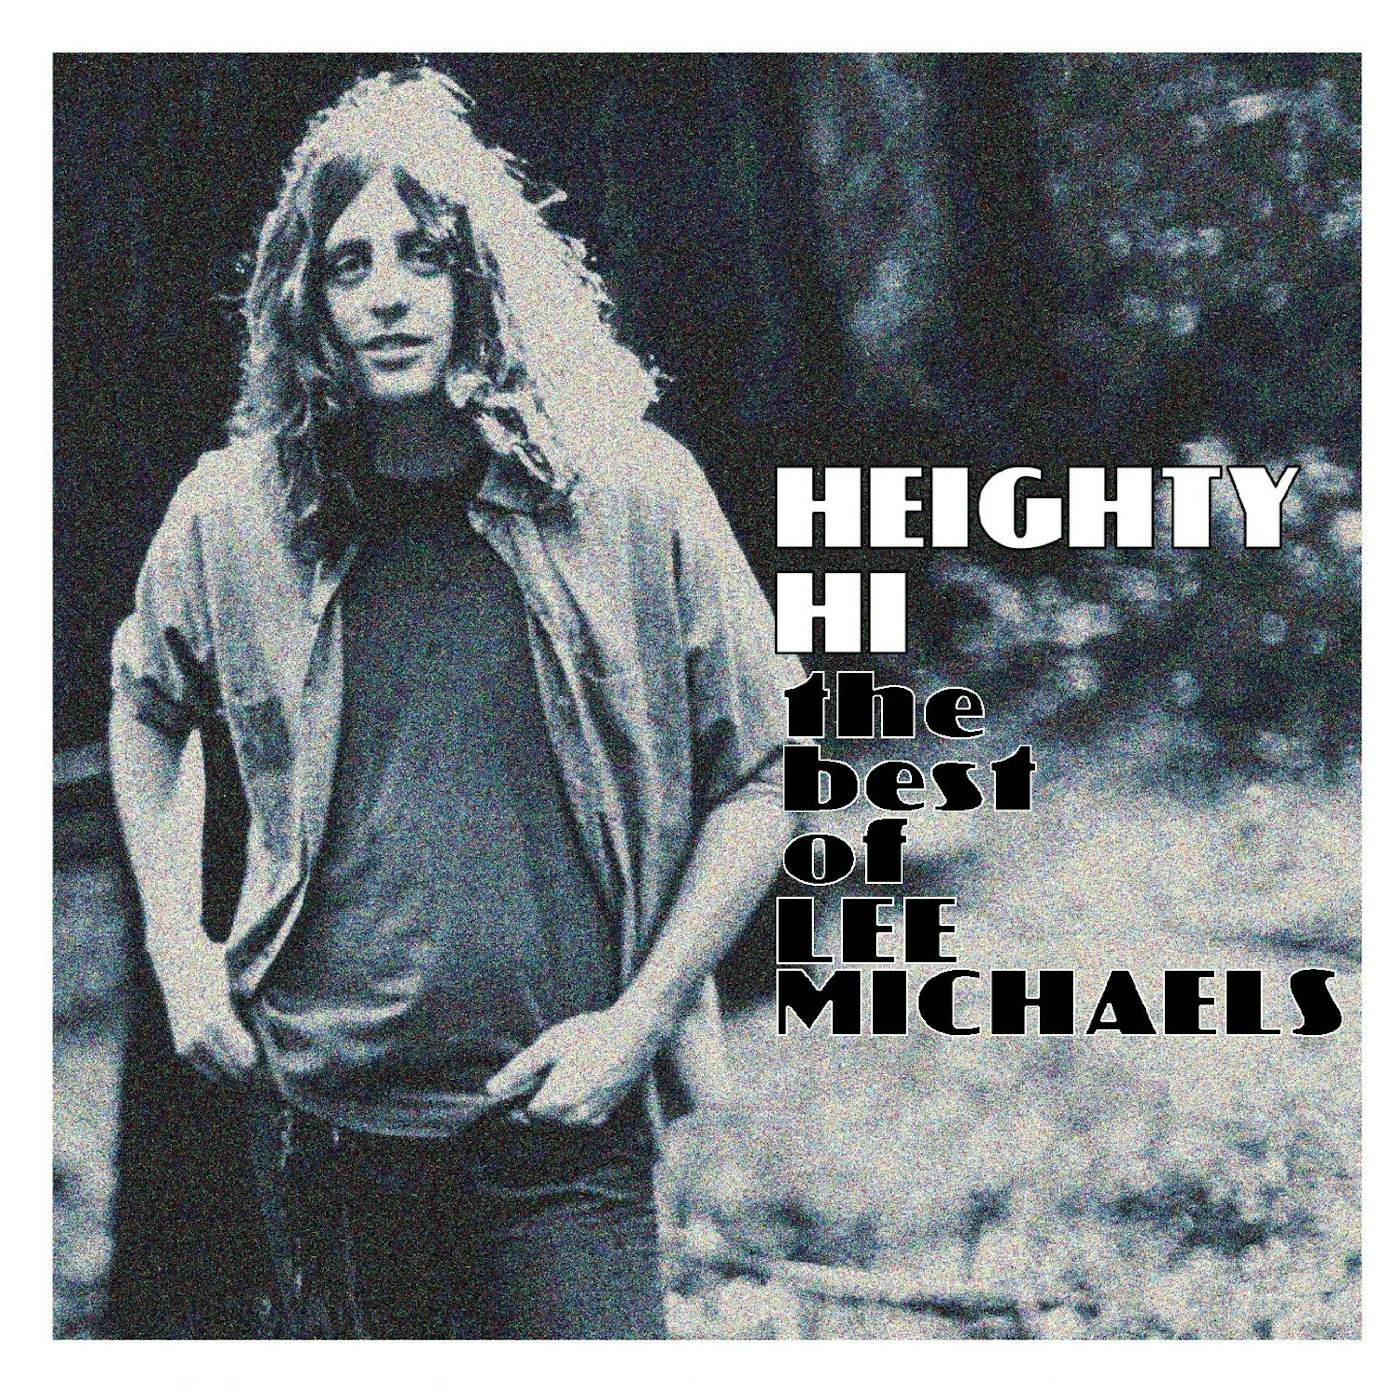 HEIGHTY HI - THE BEST OF LEE MICHAELS CD